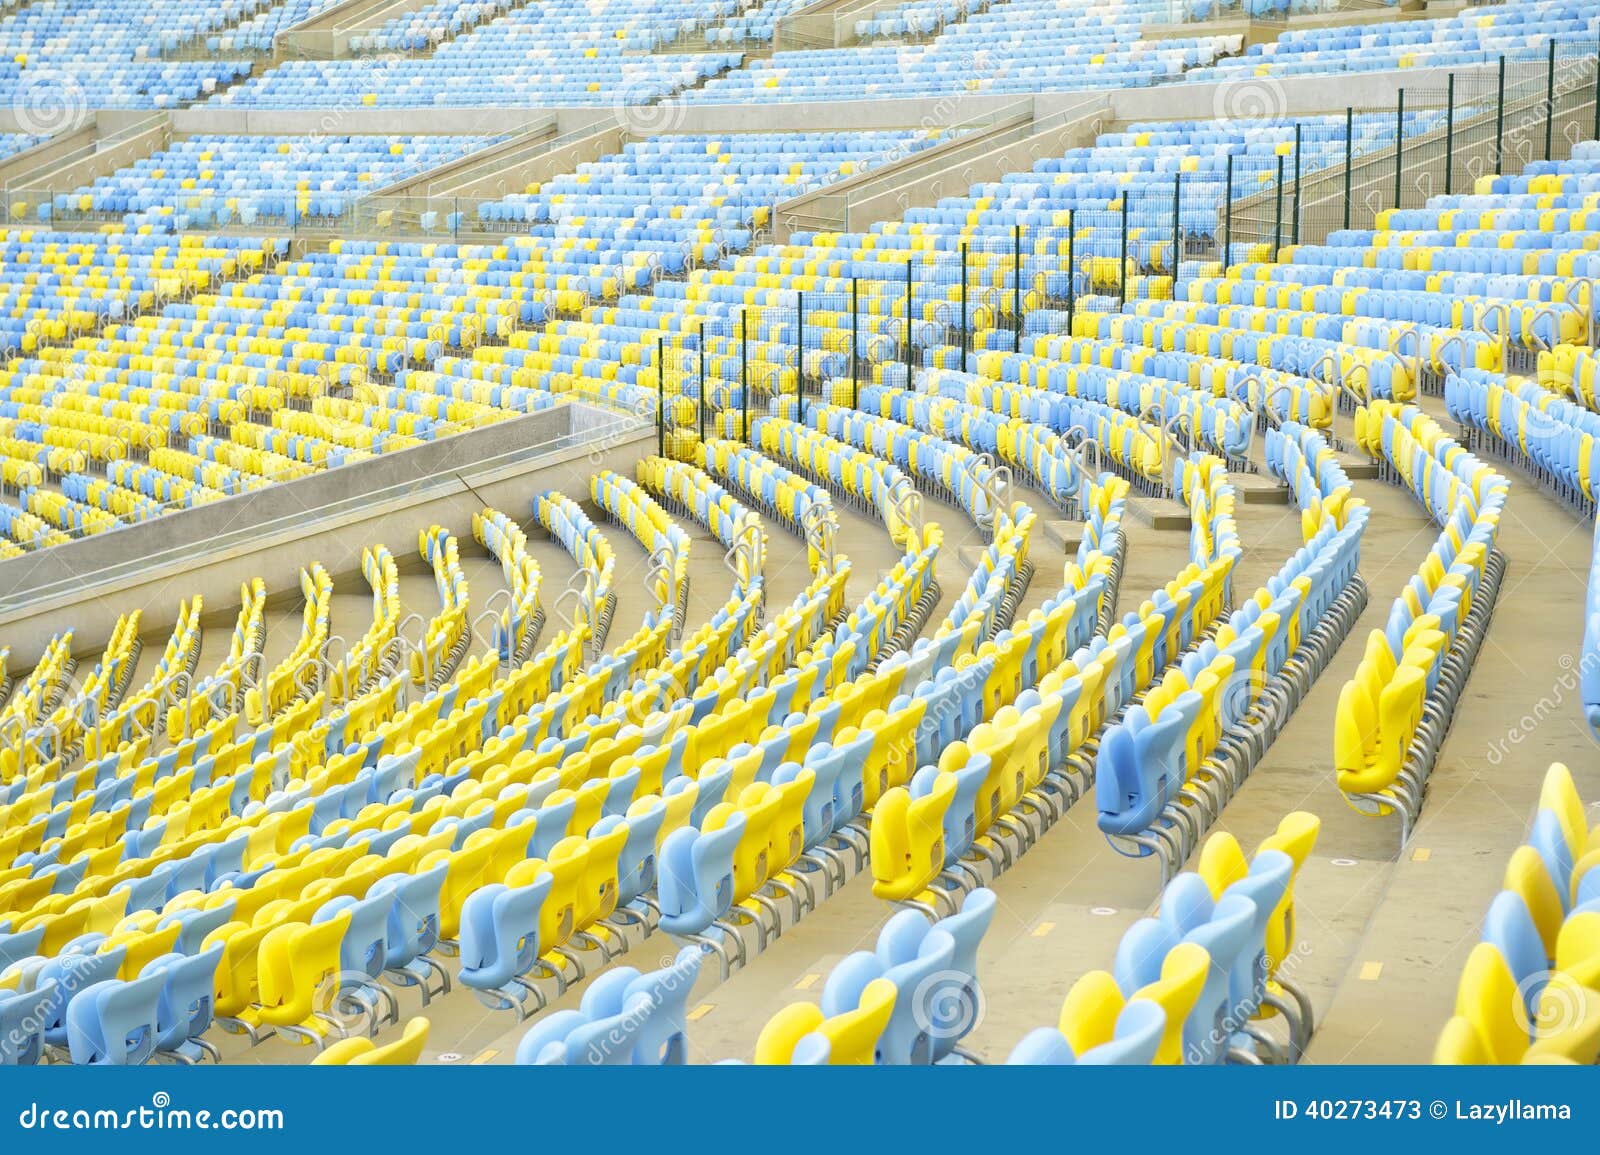 blue-yellow-stadium-seating-rio-brazil-rows-colorful-outdoor-de-janeiro-40273473.jpg